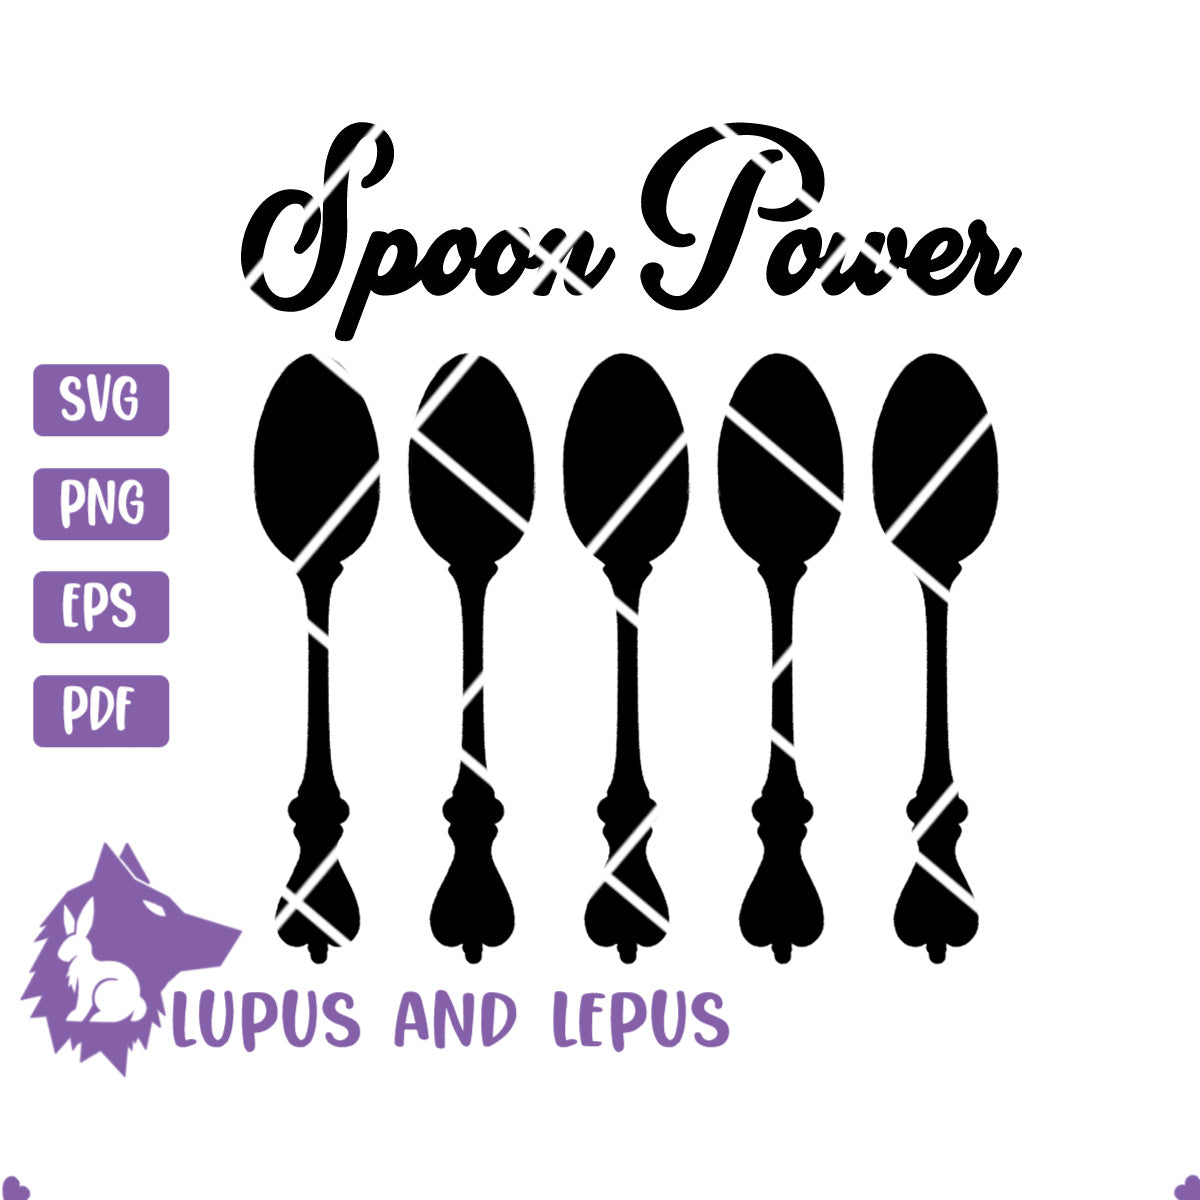 DIGITAL FILE - Spoon Power, spoons svg, lupus svg, chronic illness, spoon theory svg, fibromyalgia, rheumatoid arthritis, spoonie